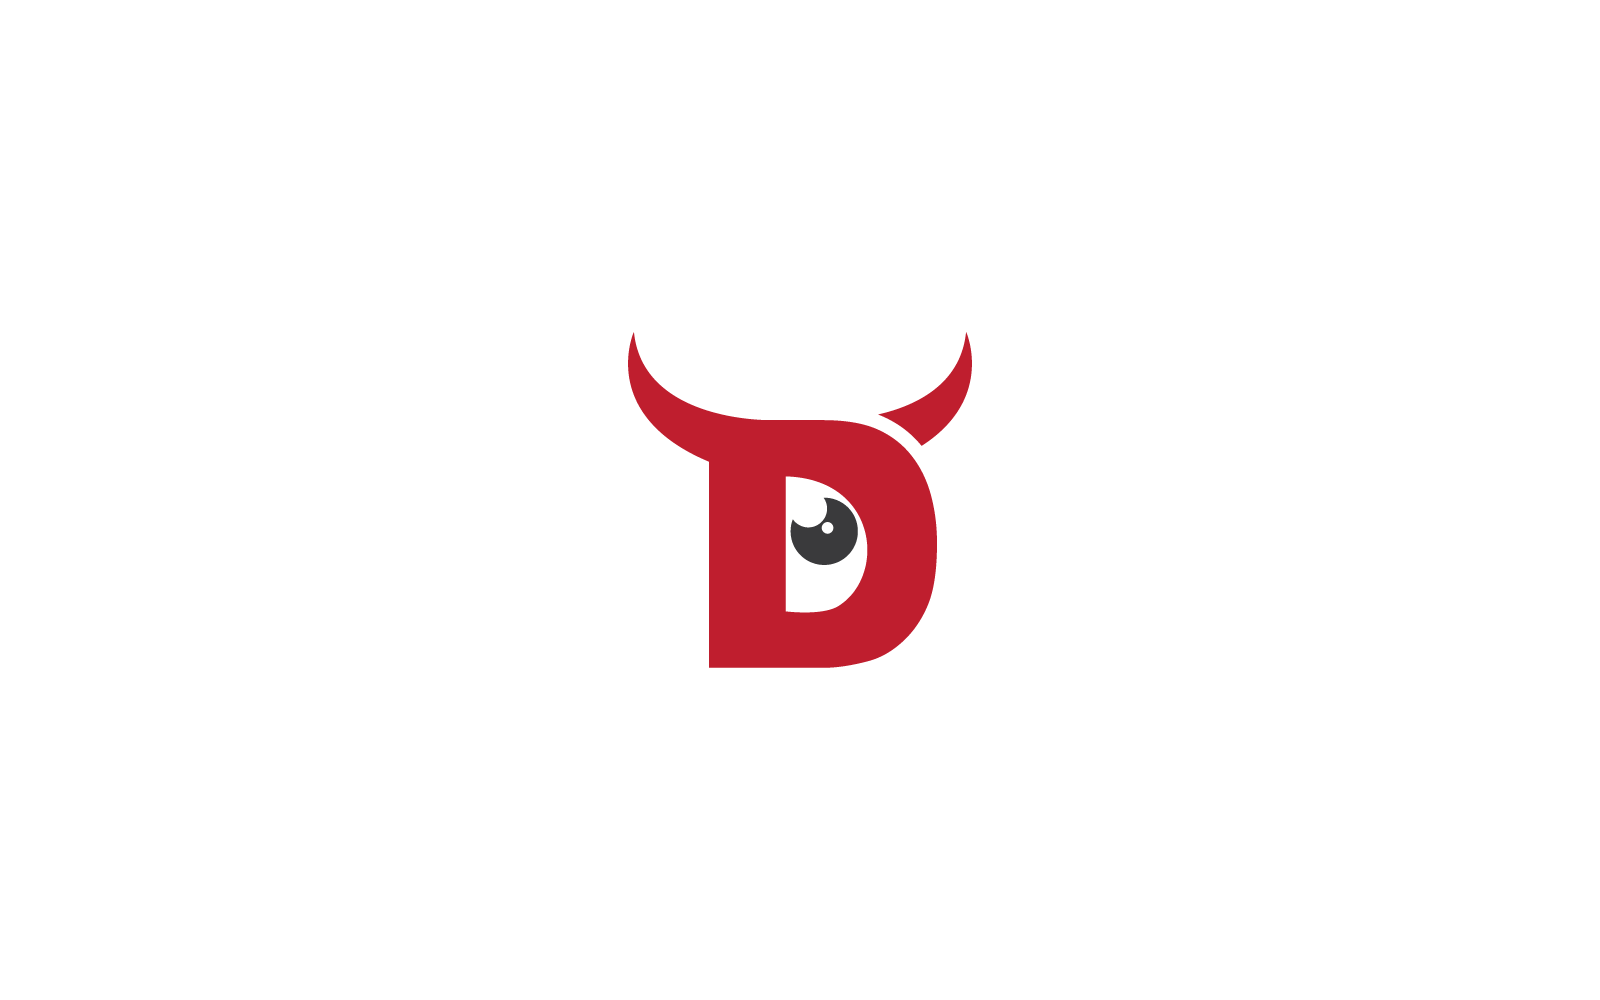 D initial letter with devil horn logo vector design